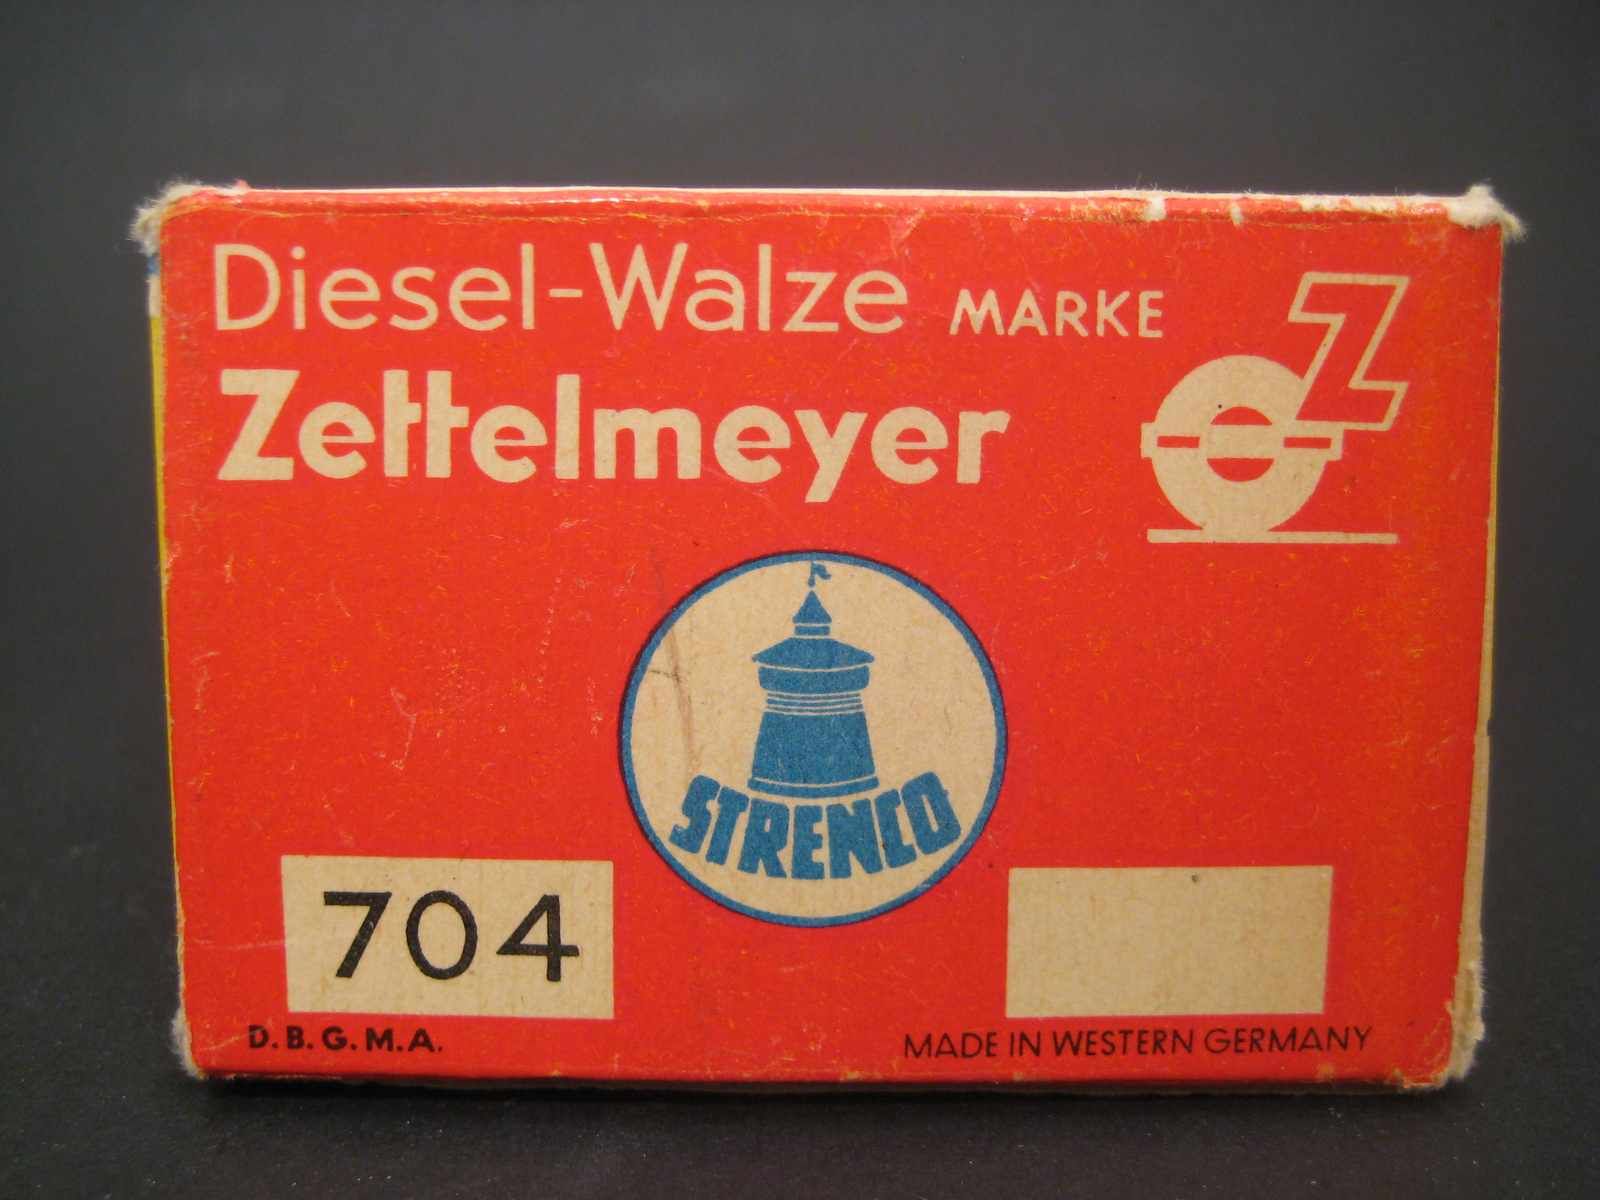 Strenco 704 Diesel Walze Zettelmeyer im OK Mint/Museal